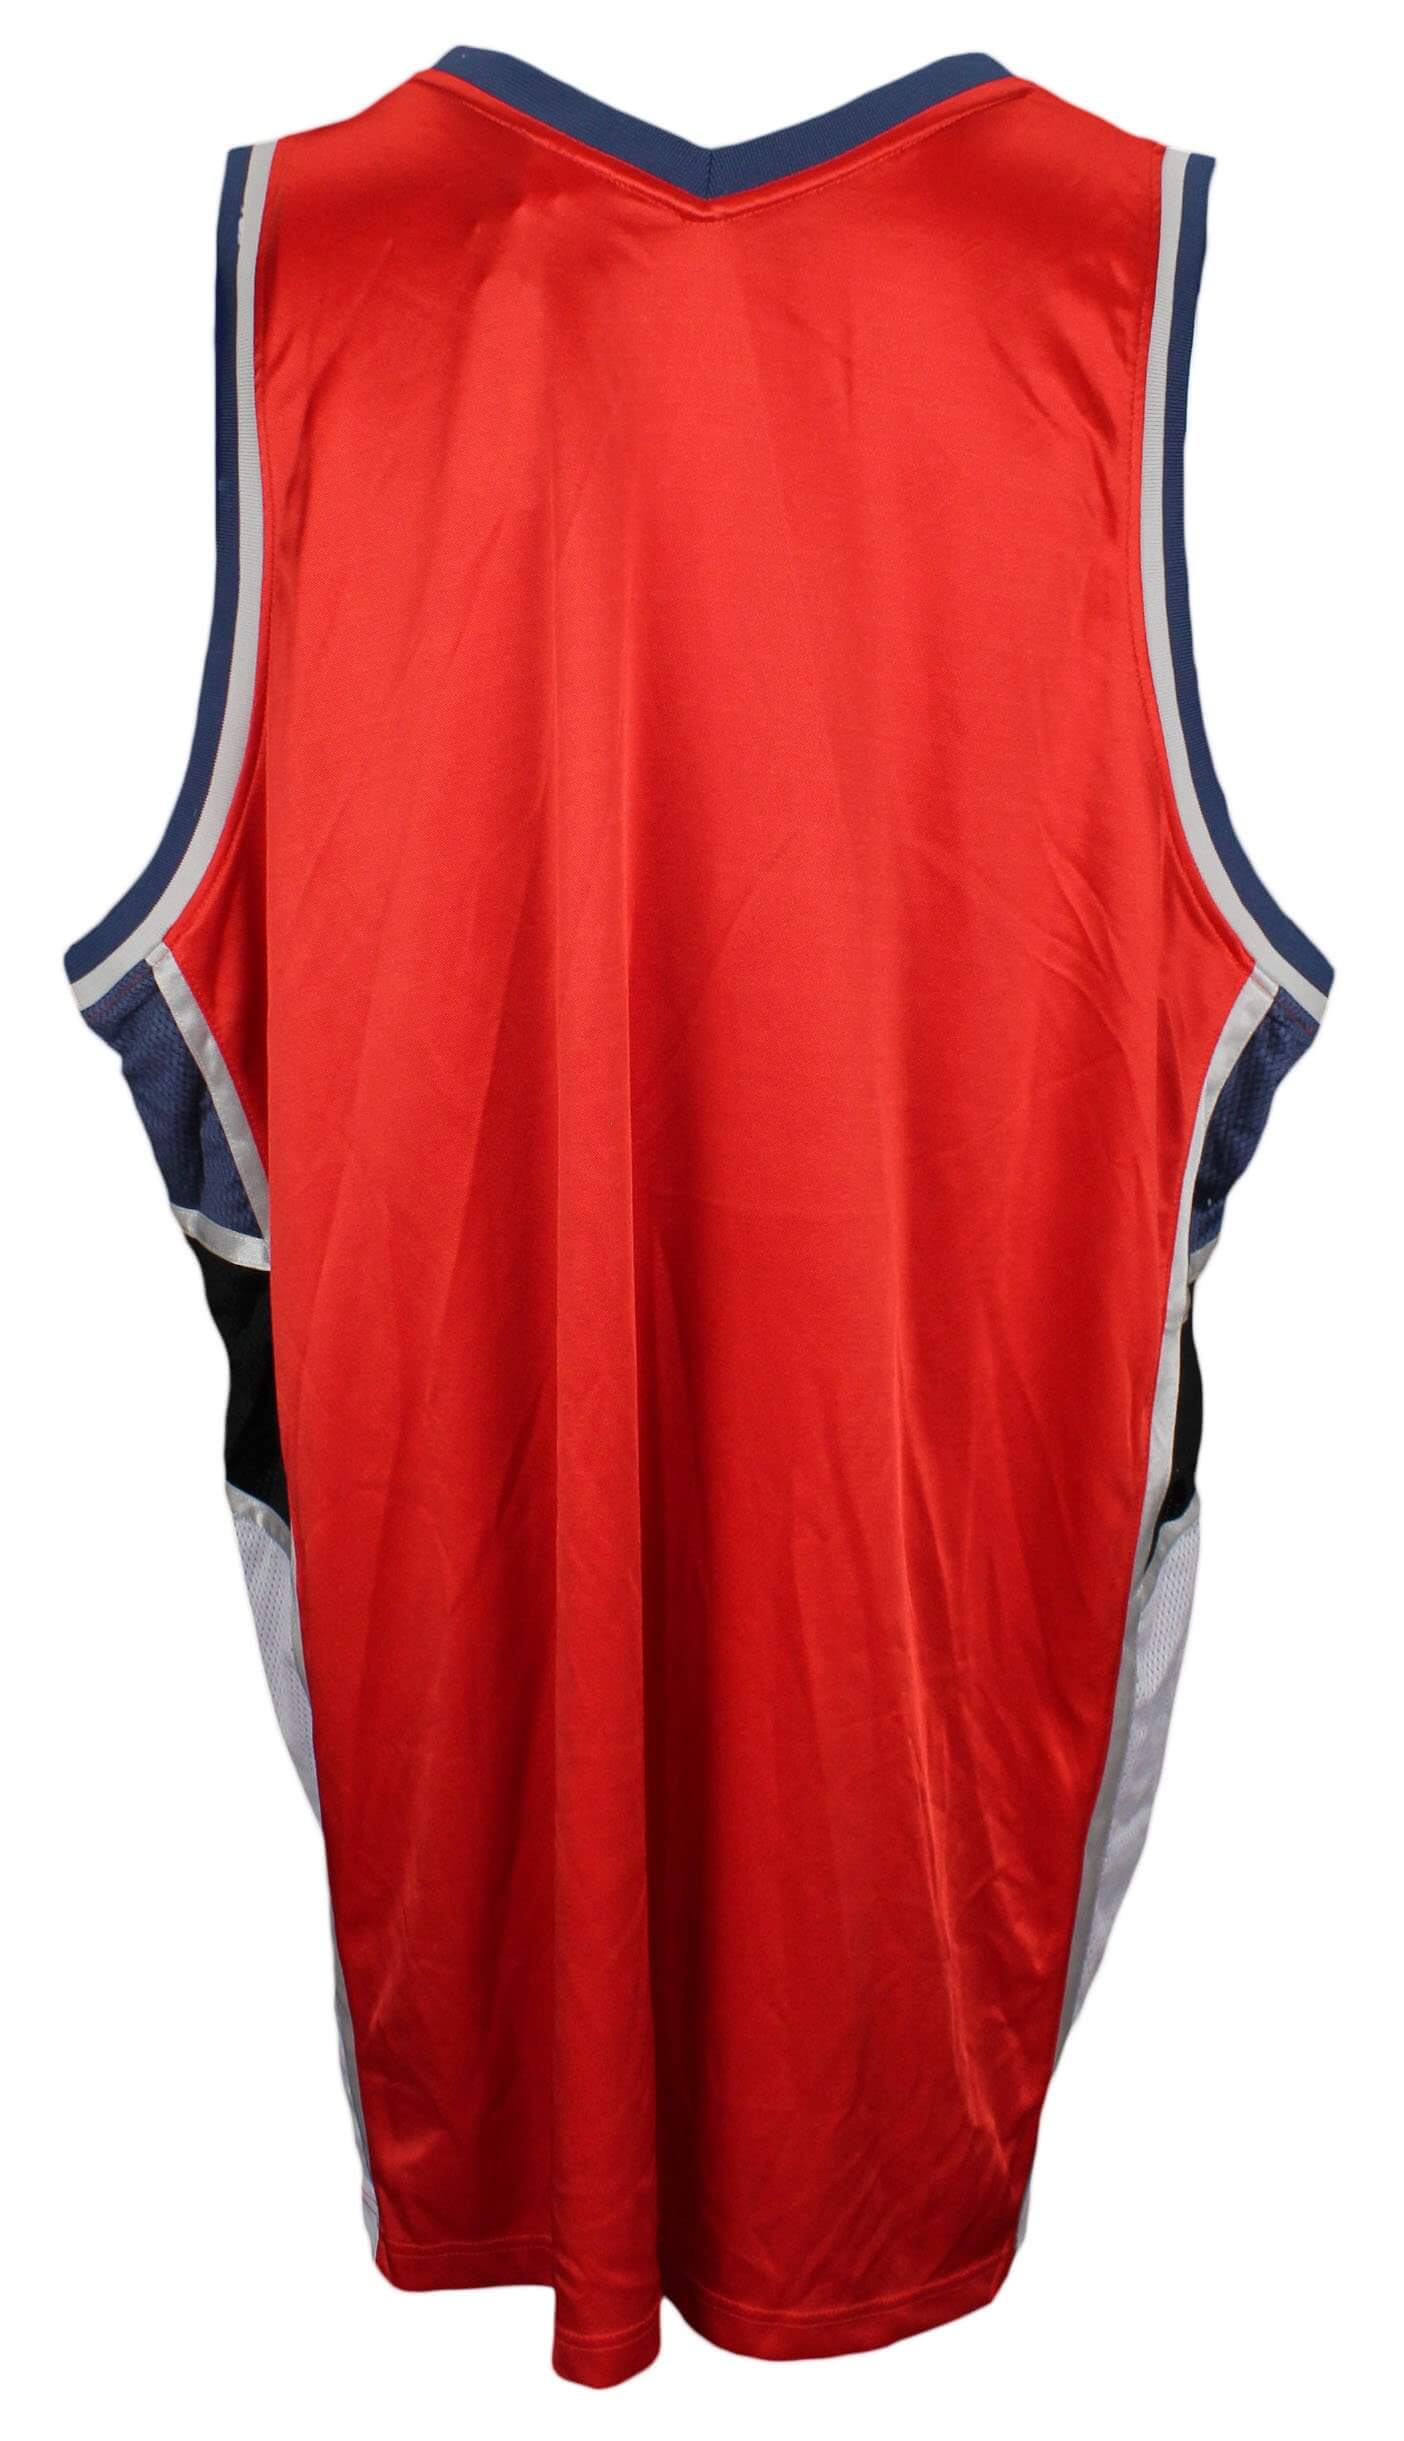 Adidas Men's Chicago Bulls NBA BLANK Basketball Jersey, White – Fanletic